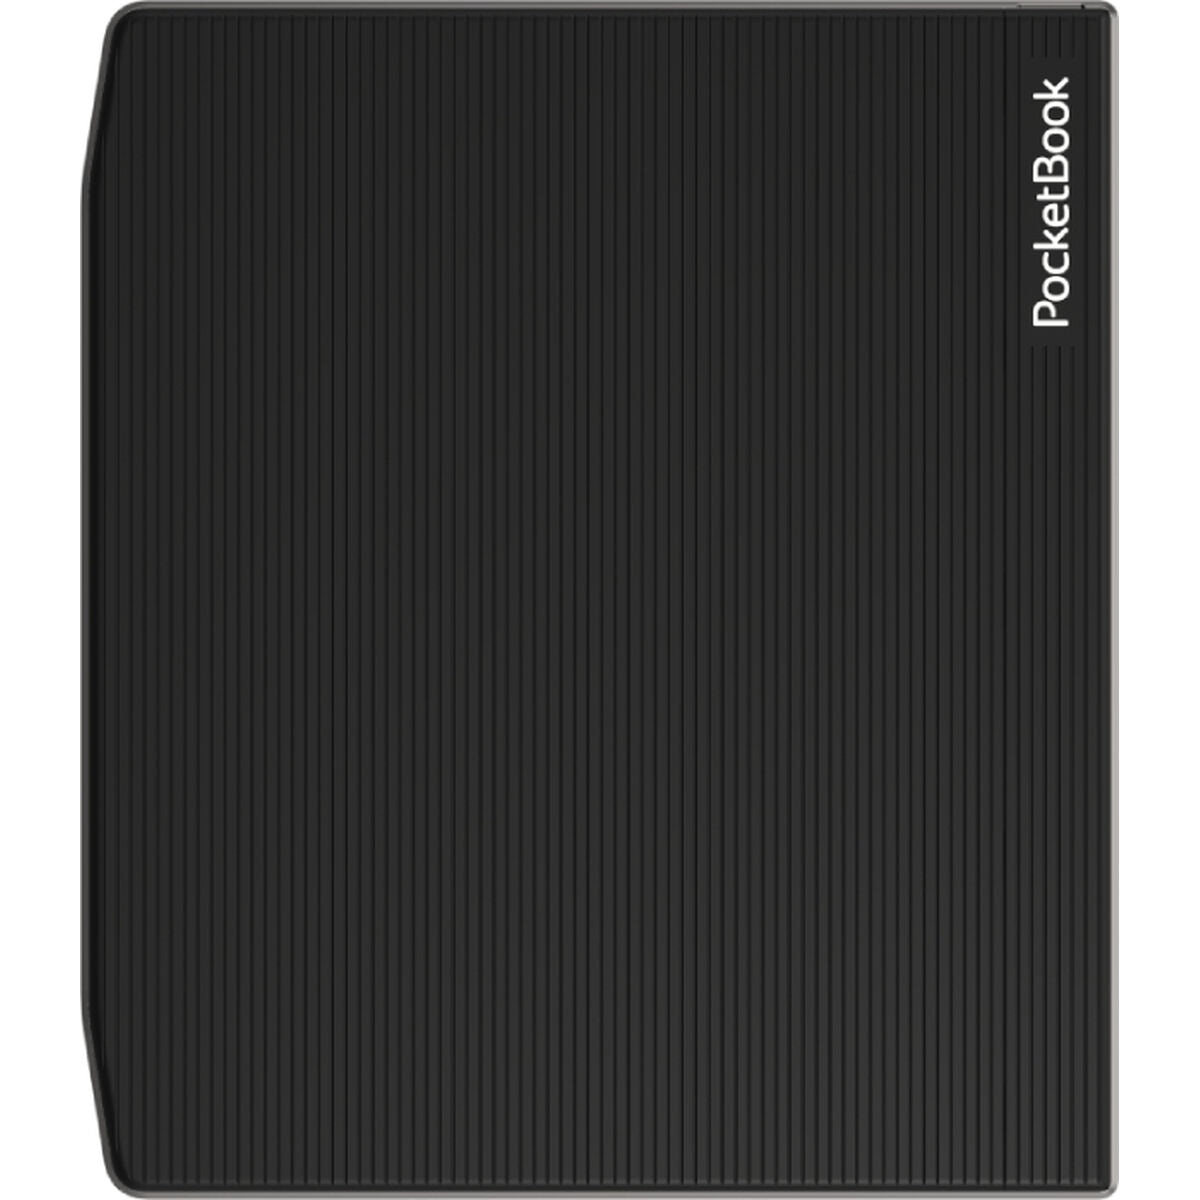 EBook PocketBook Era Stardust PB700-U-16-WW Multicolour Black/Silver 16 GB